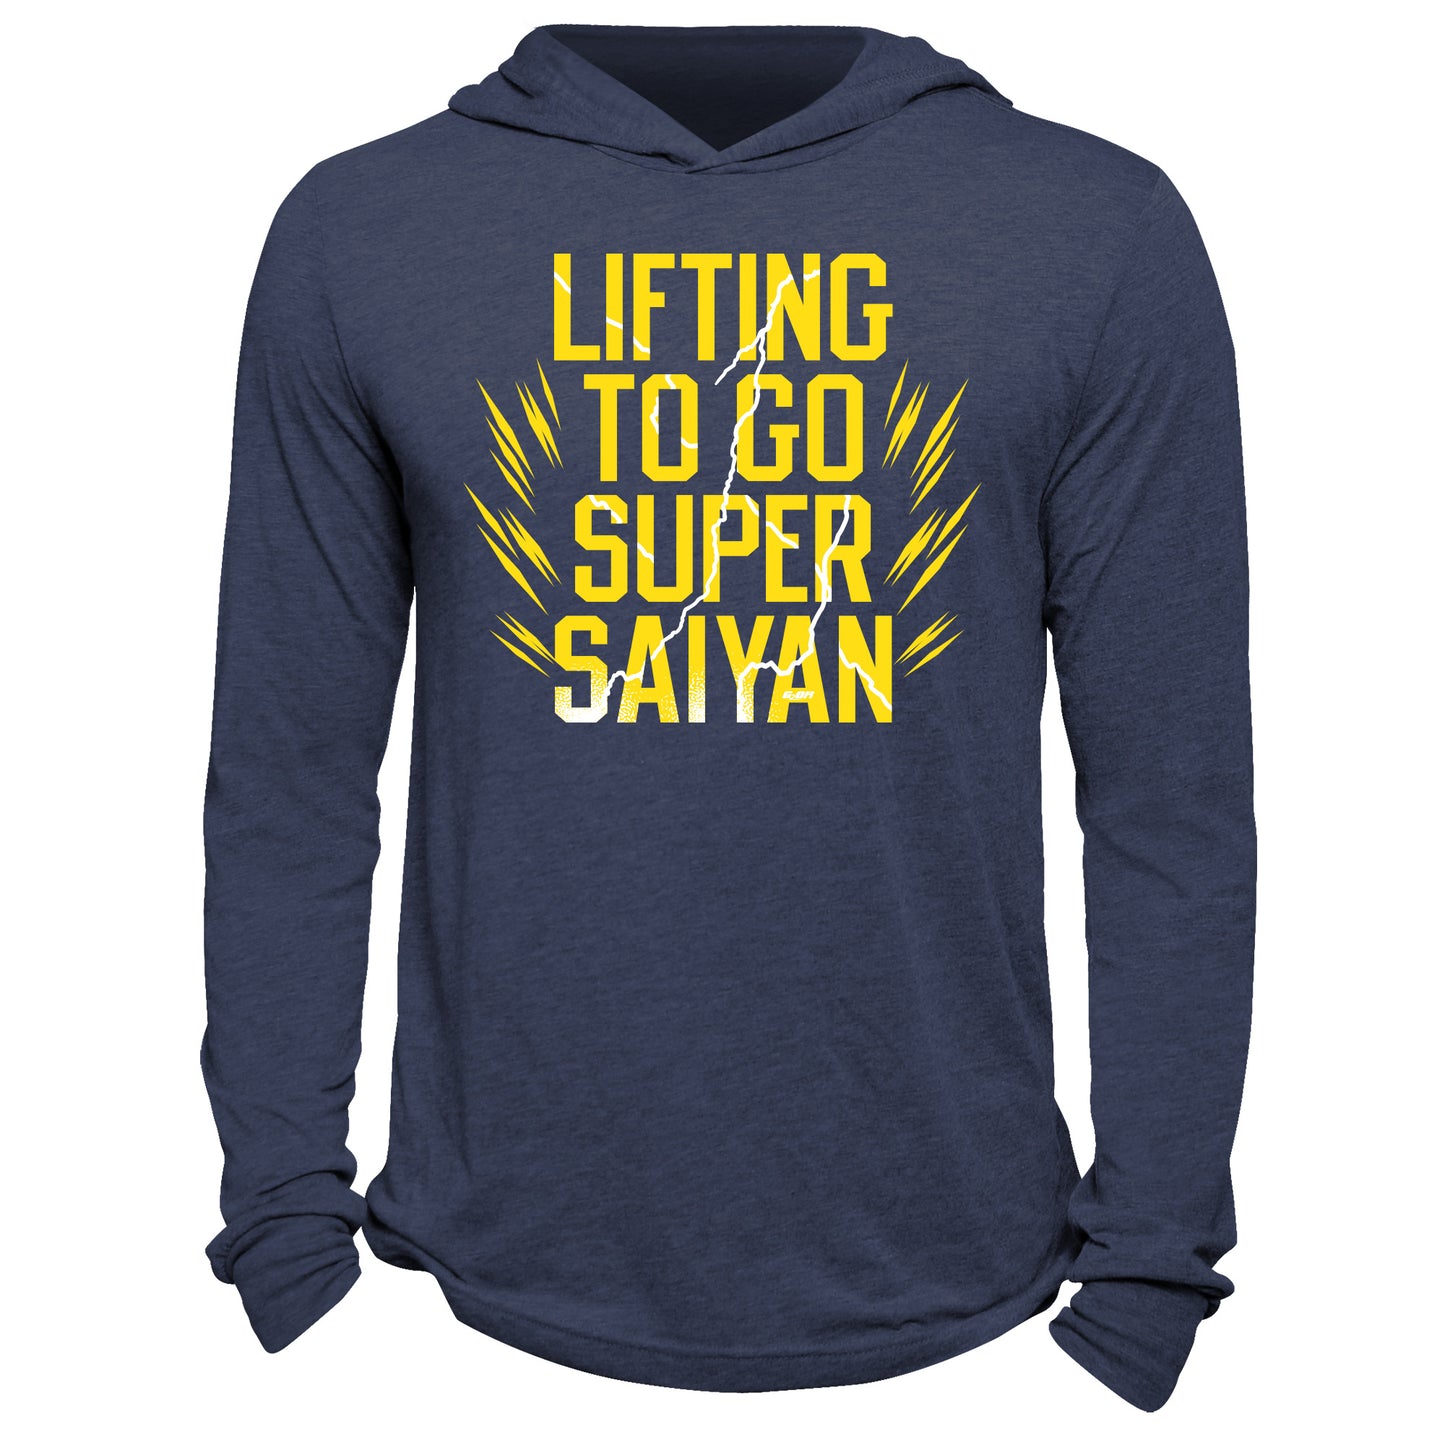 Lifting To Go Super Saiyan Hoodie